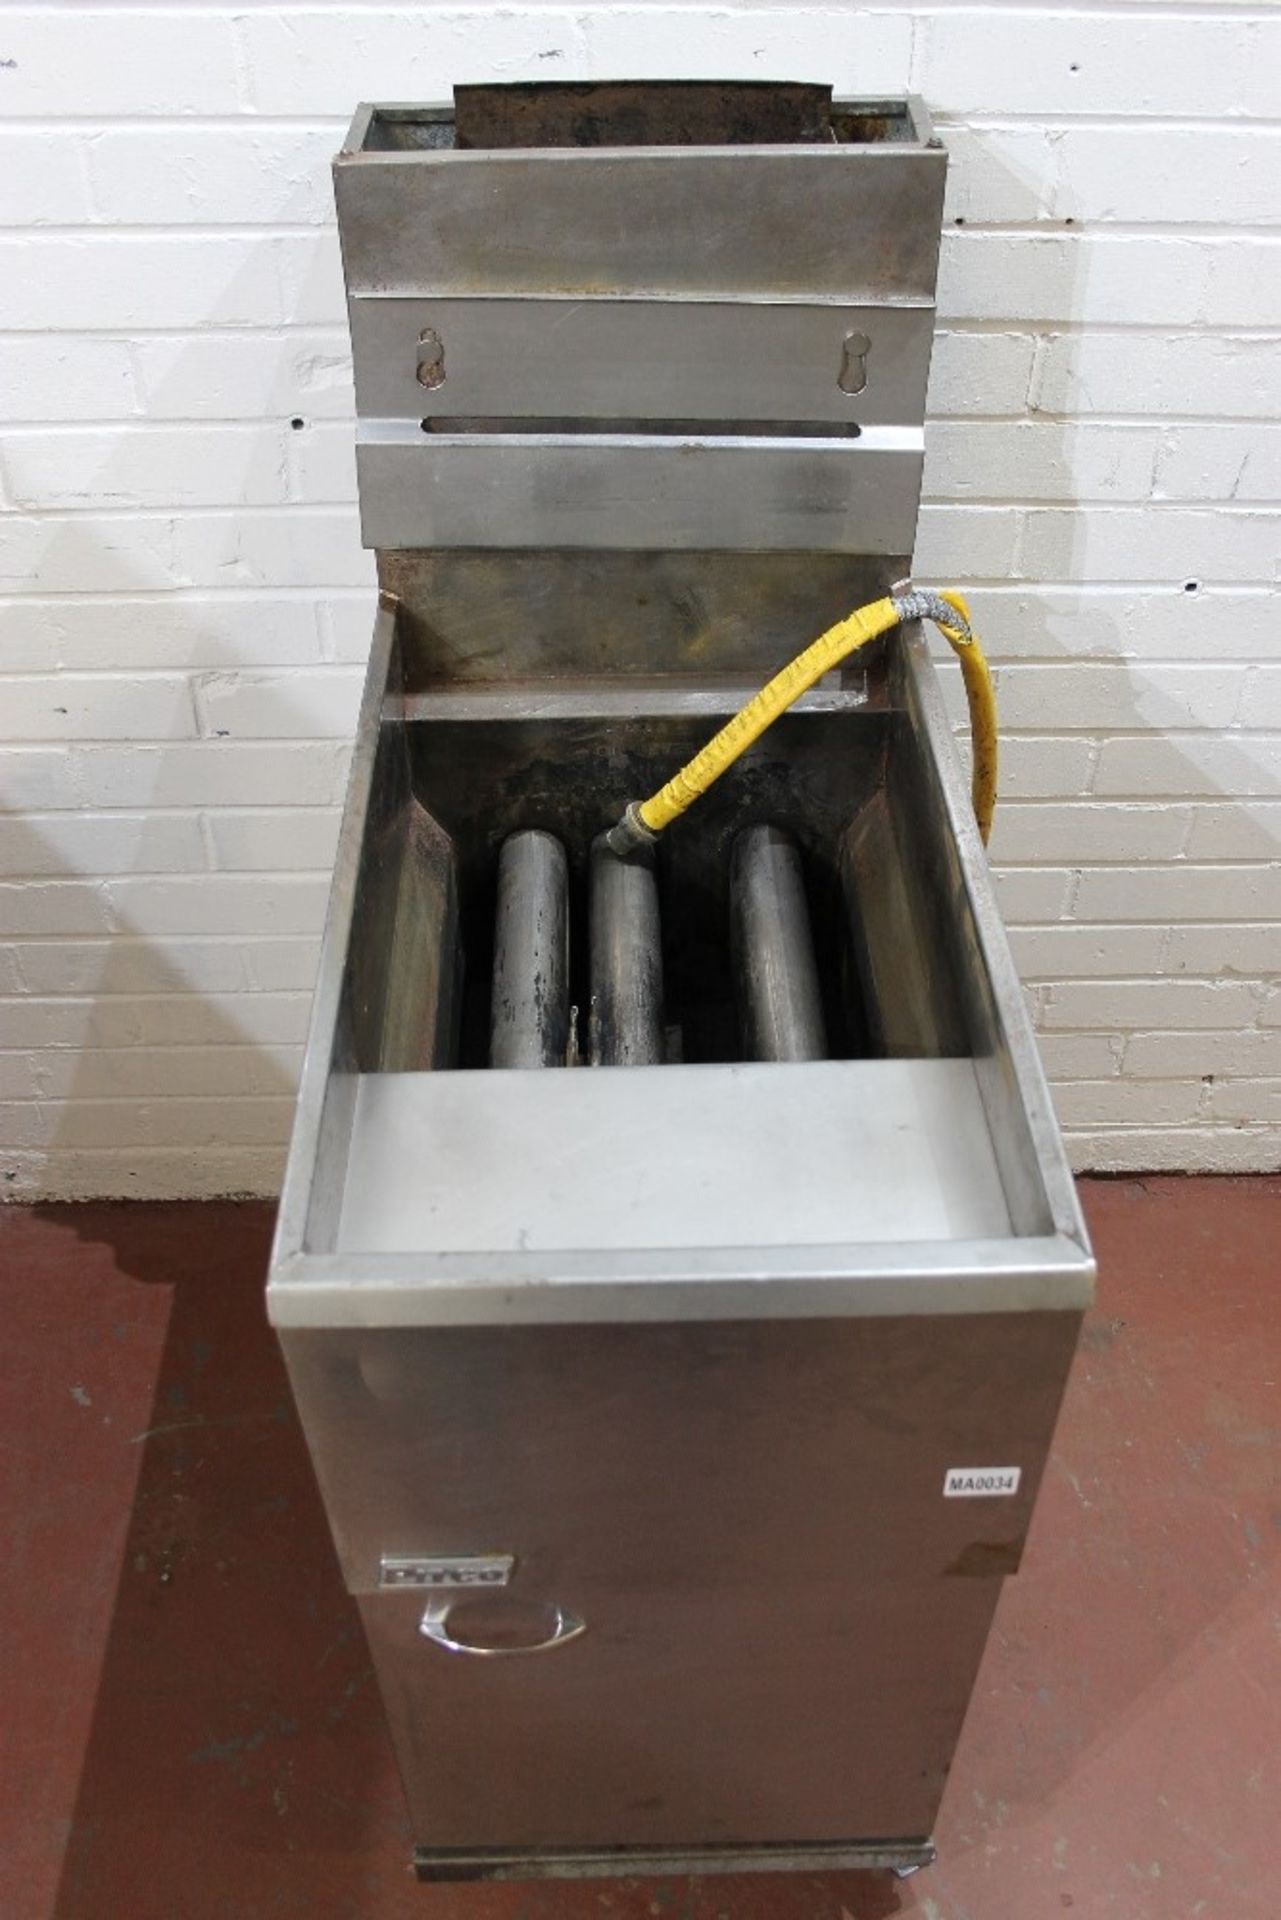 Pitco Single Tank Gas Fryer – No Baskets – as found   NO VAT - Image 2 of 3